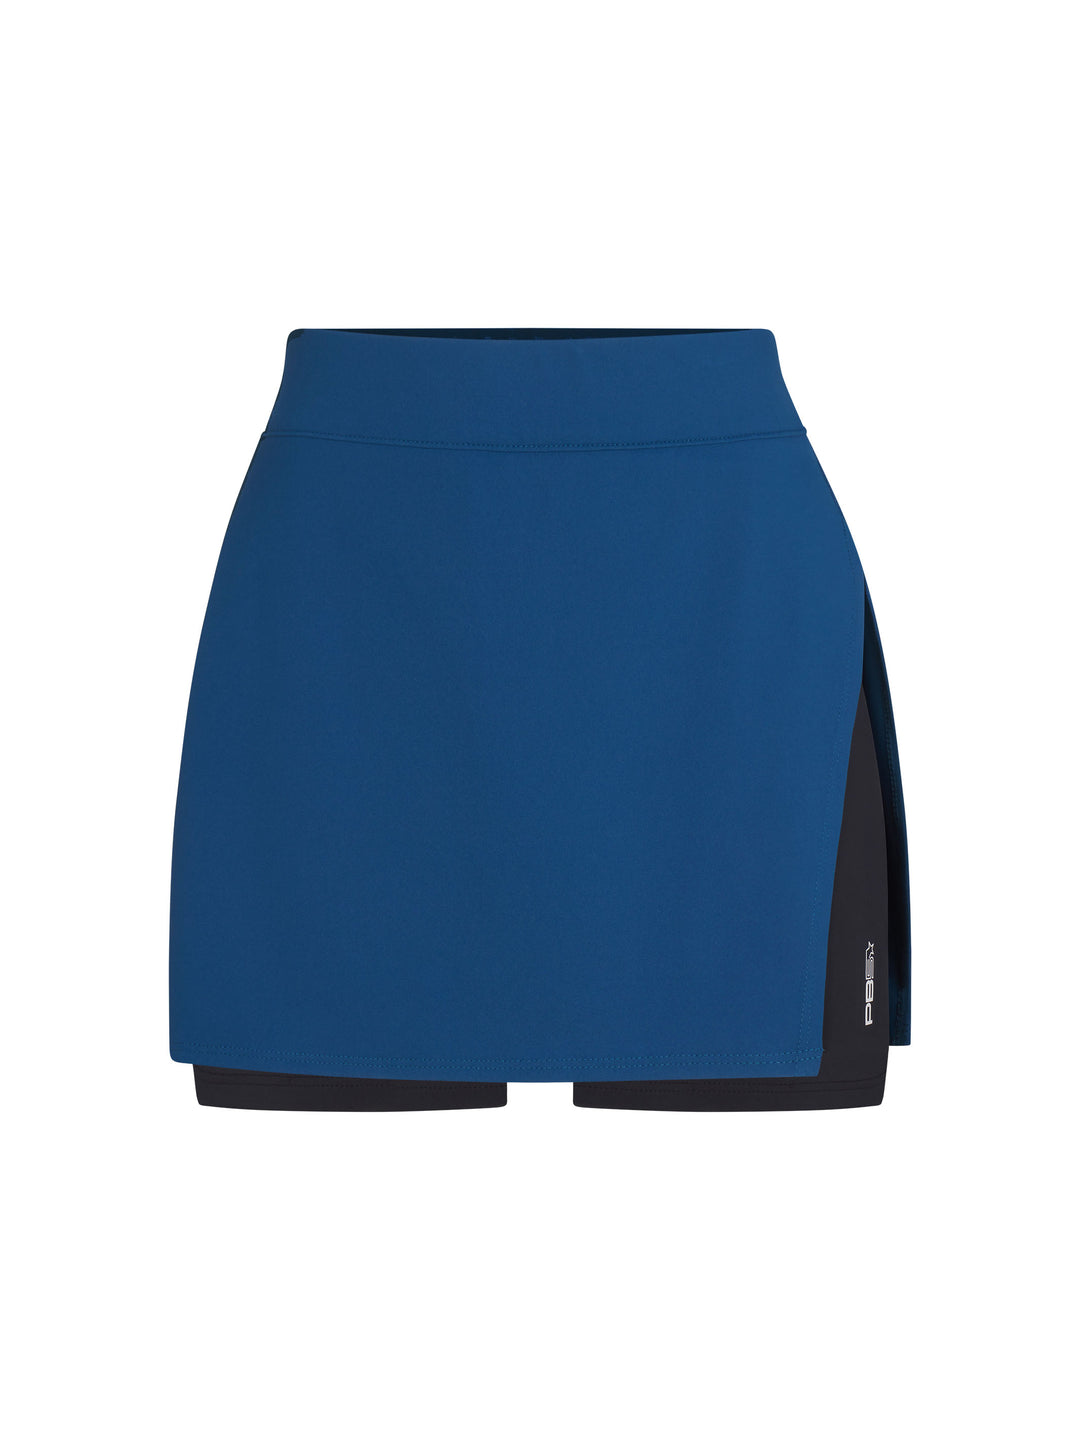  Side Split Skirt front view in astral blue and black. Small logo on left leg.